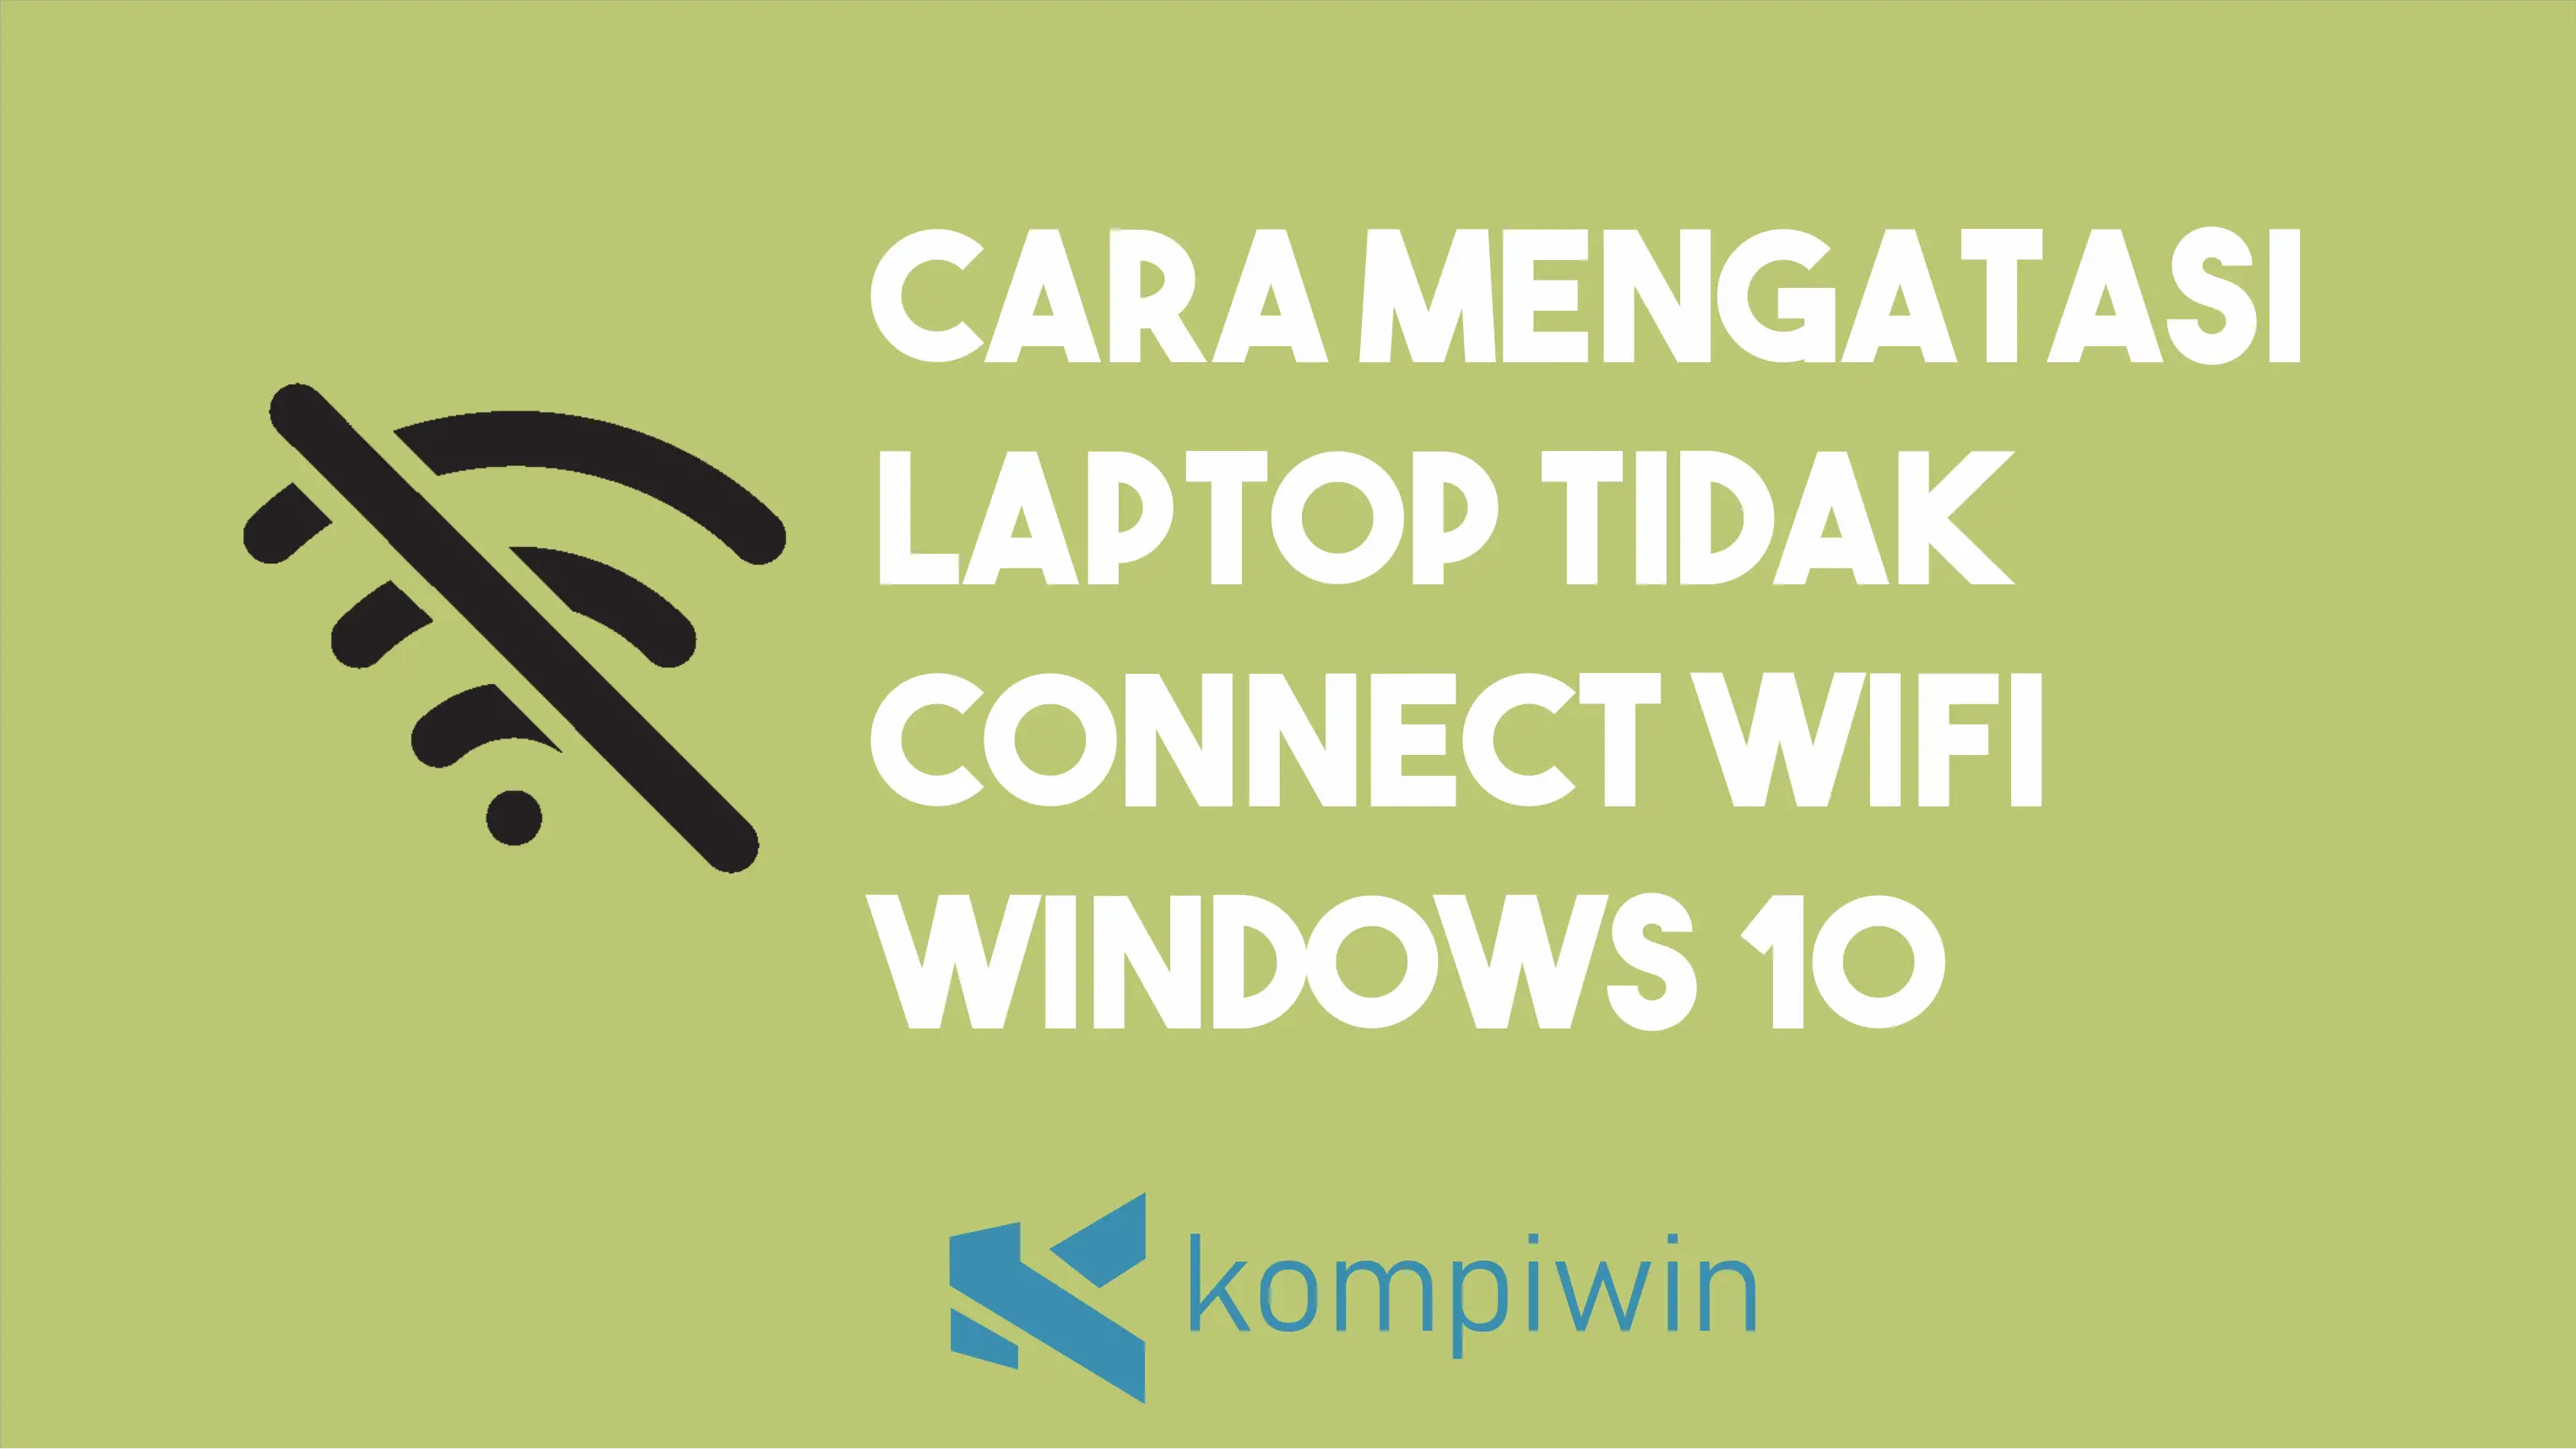 Cara Mengatasi Laptop Tidak Connect Wifi Windows 10